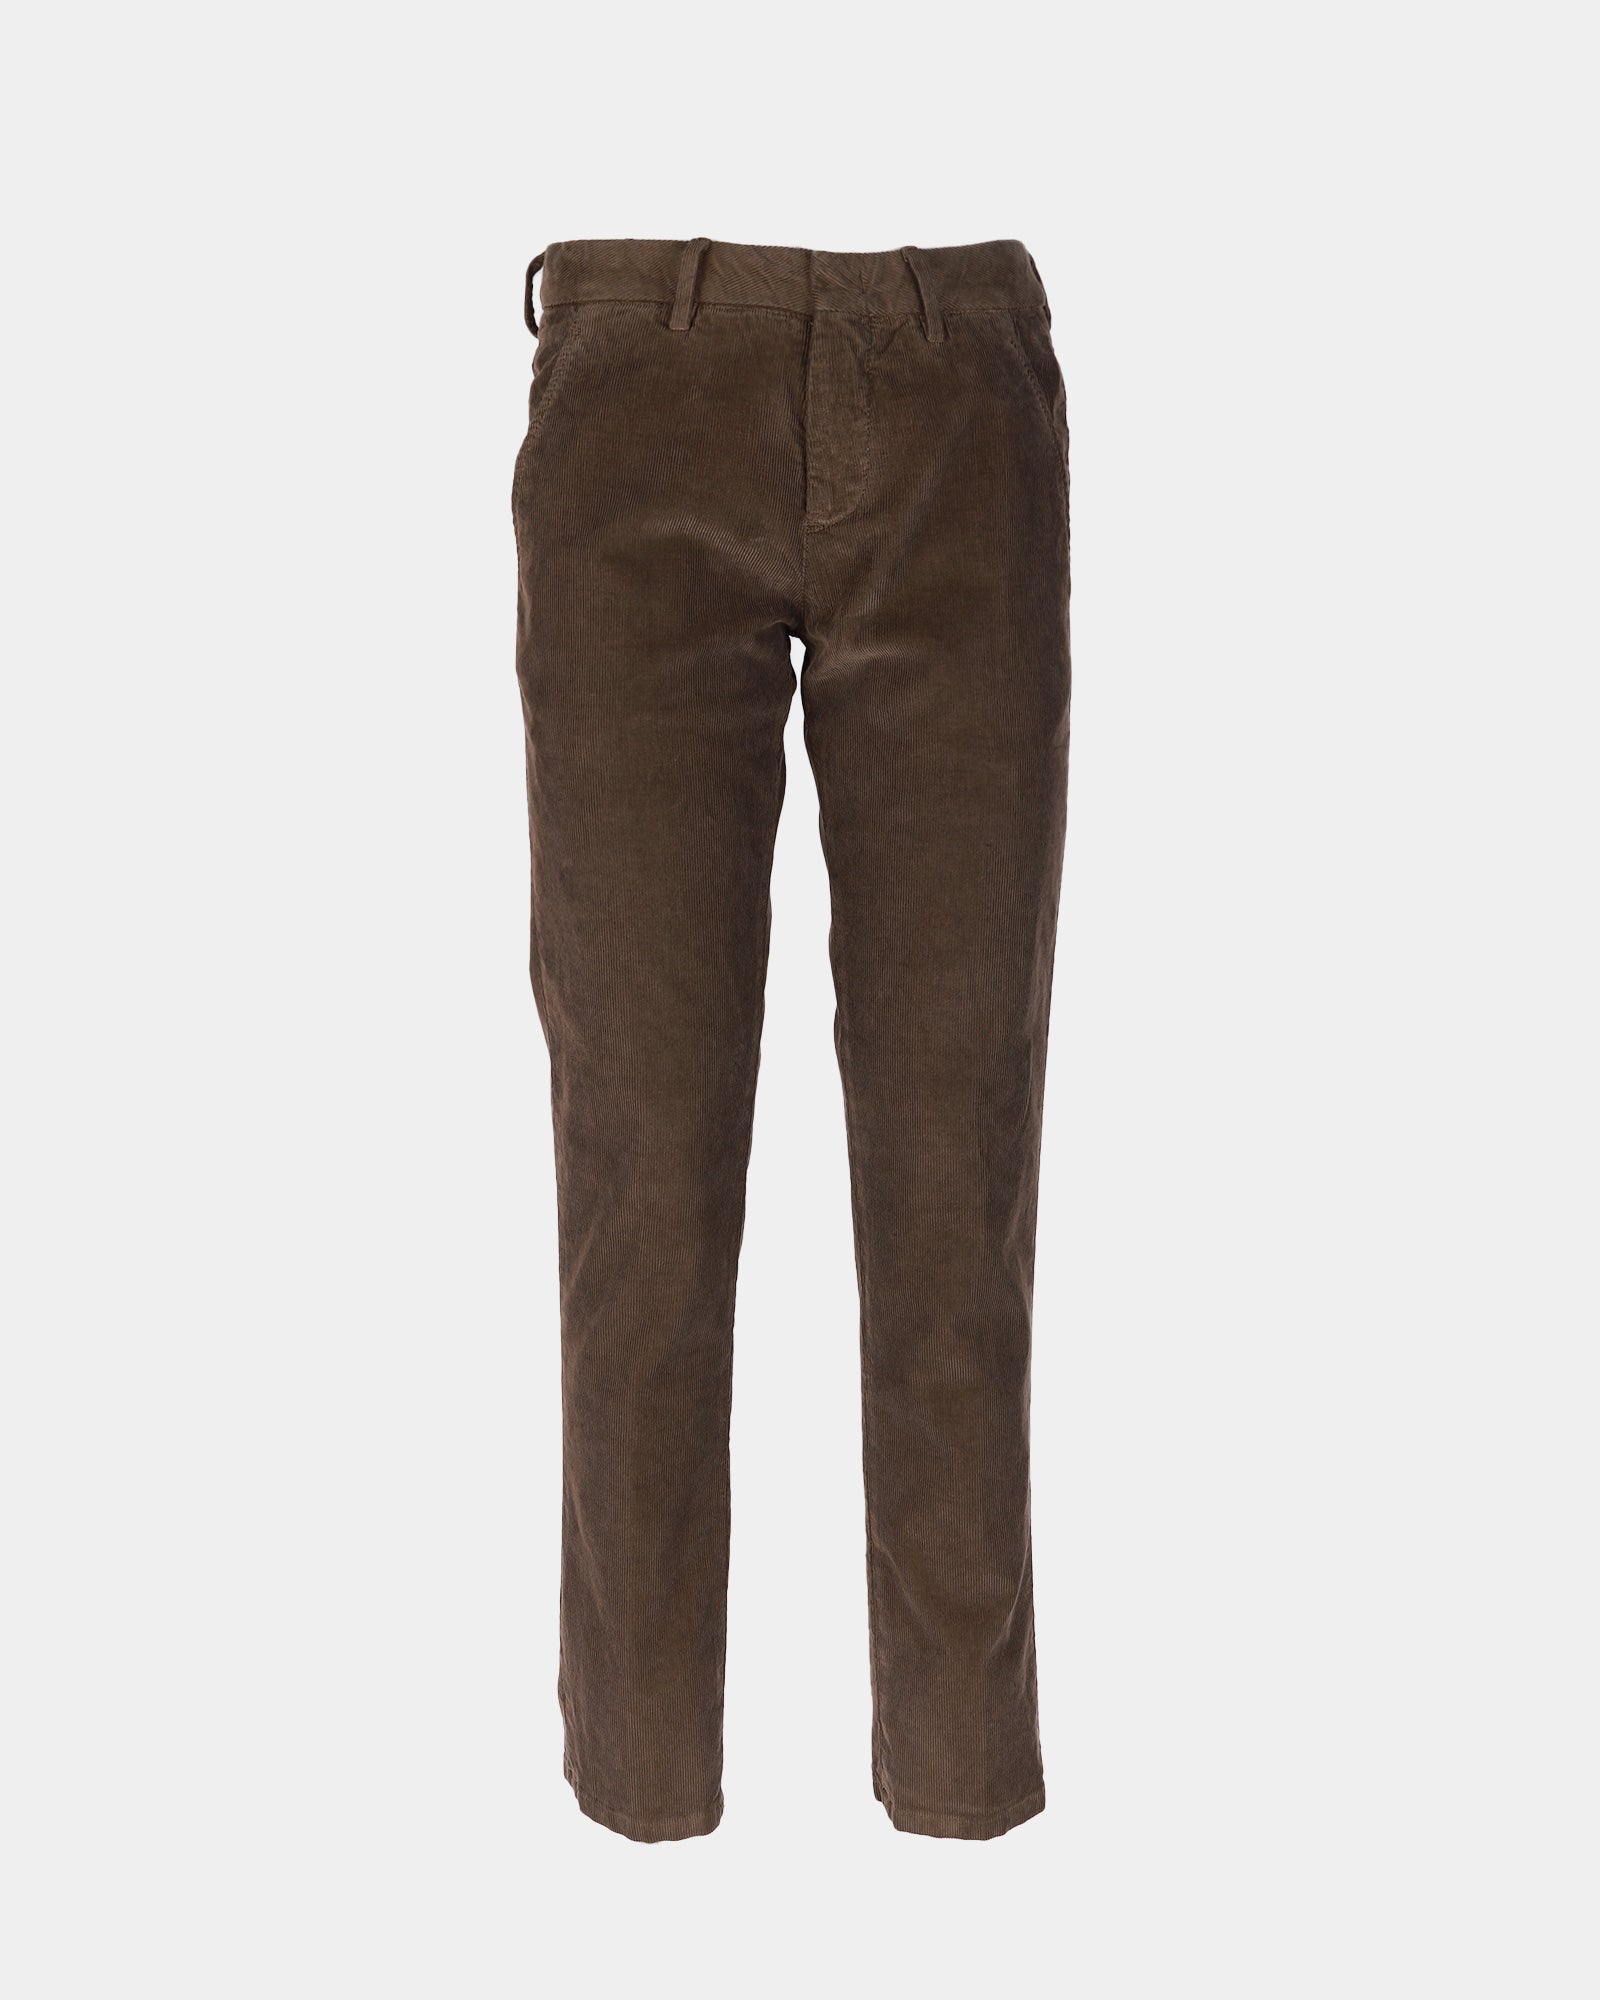 Pantalone PT marrone